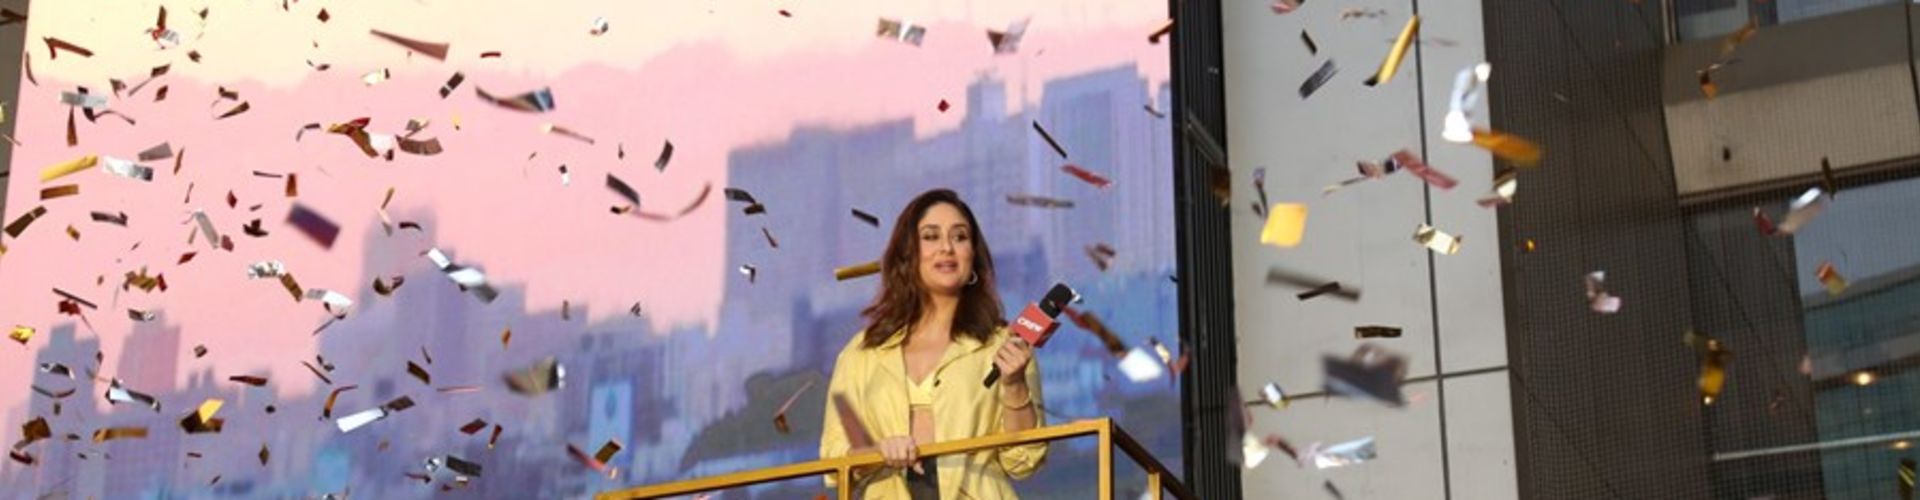 Kareena Kapoor Khan Launches Song "Choli" from Upcoming Movie "Crew" in Mumbai